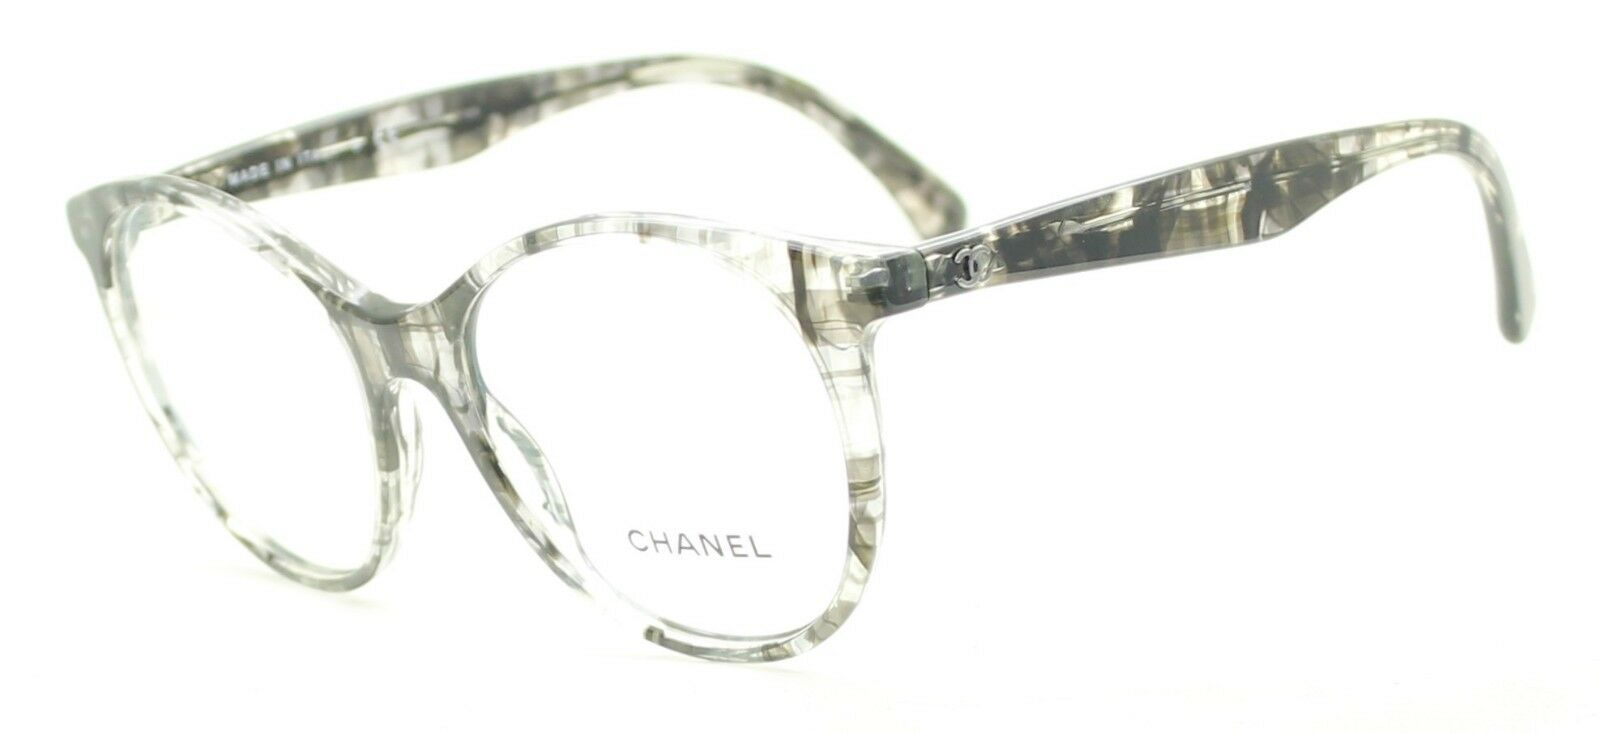 CHANEL 3332 c.501 Eyewear FRAMES Eyeglasses RX Optical Glasses New